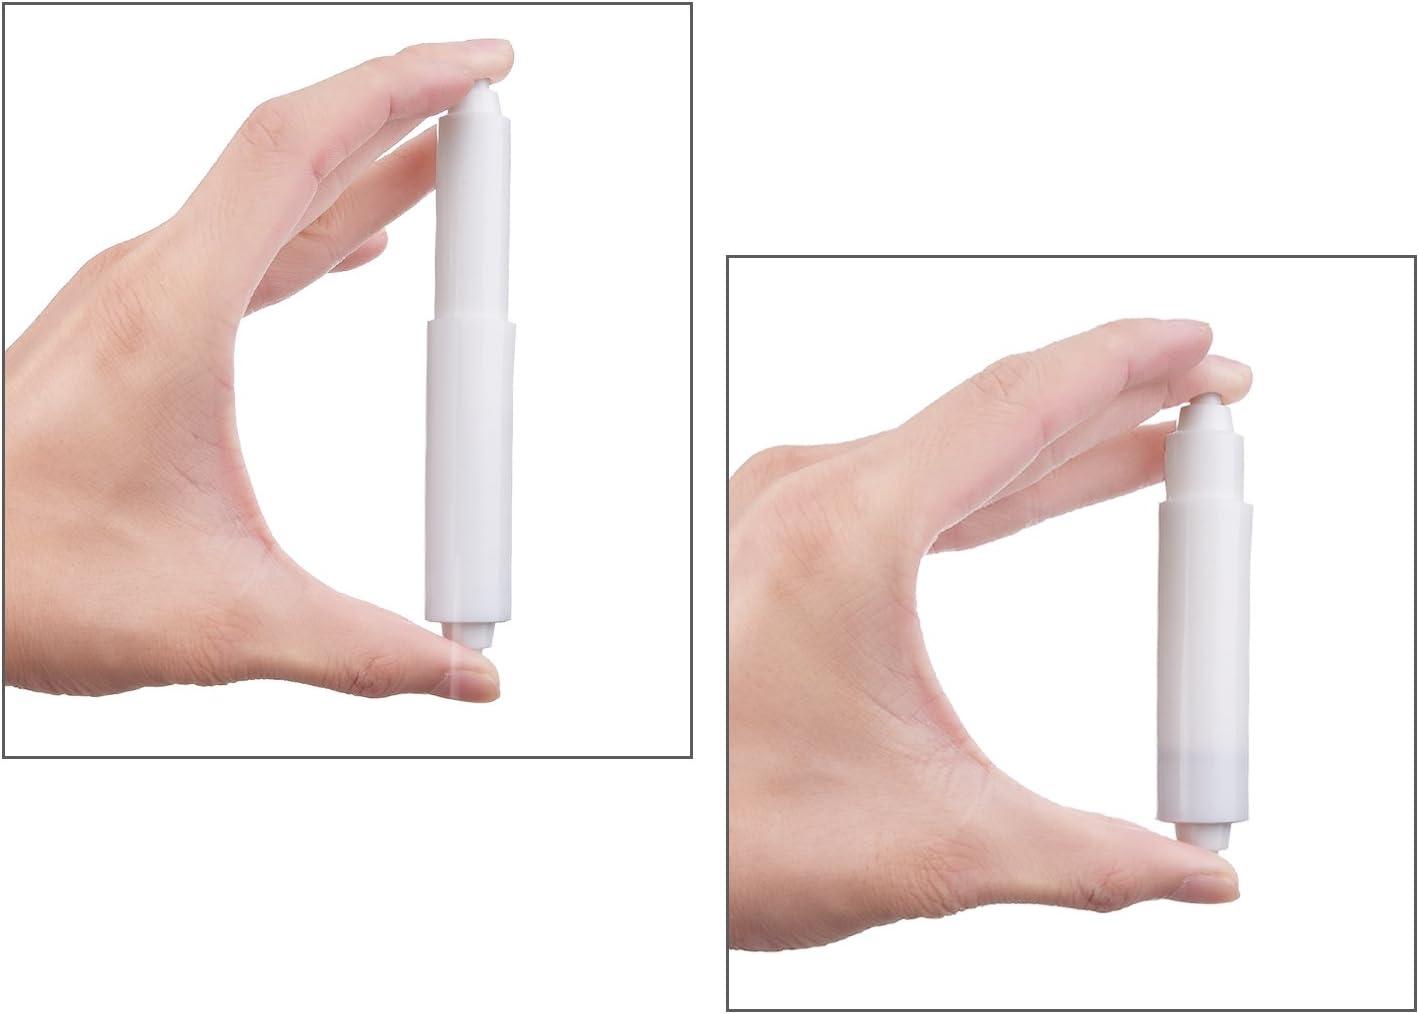 2 piezas de papel higiénico Soporte de rodillo husillo varilla de reemplazo de - VIRTUAL MUEBLES